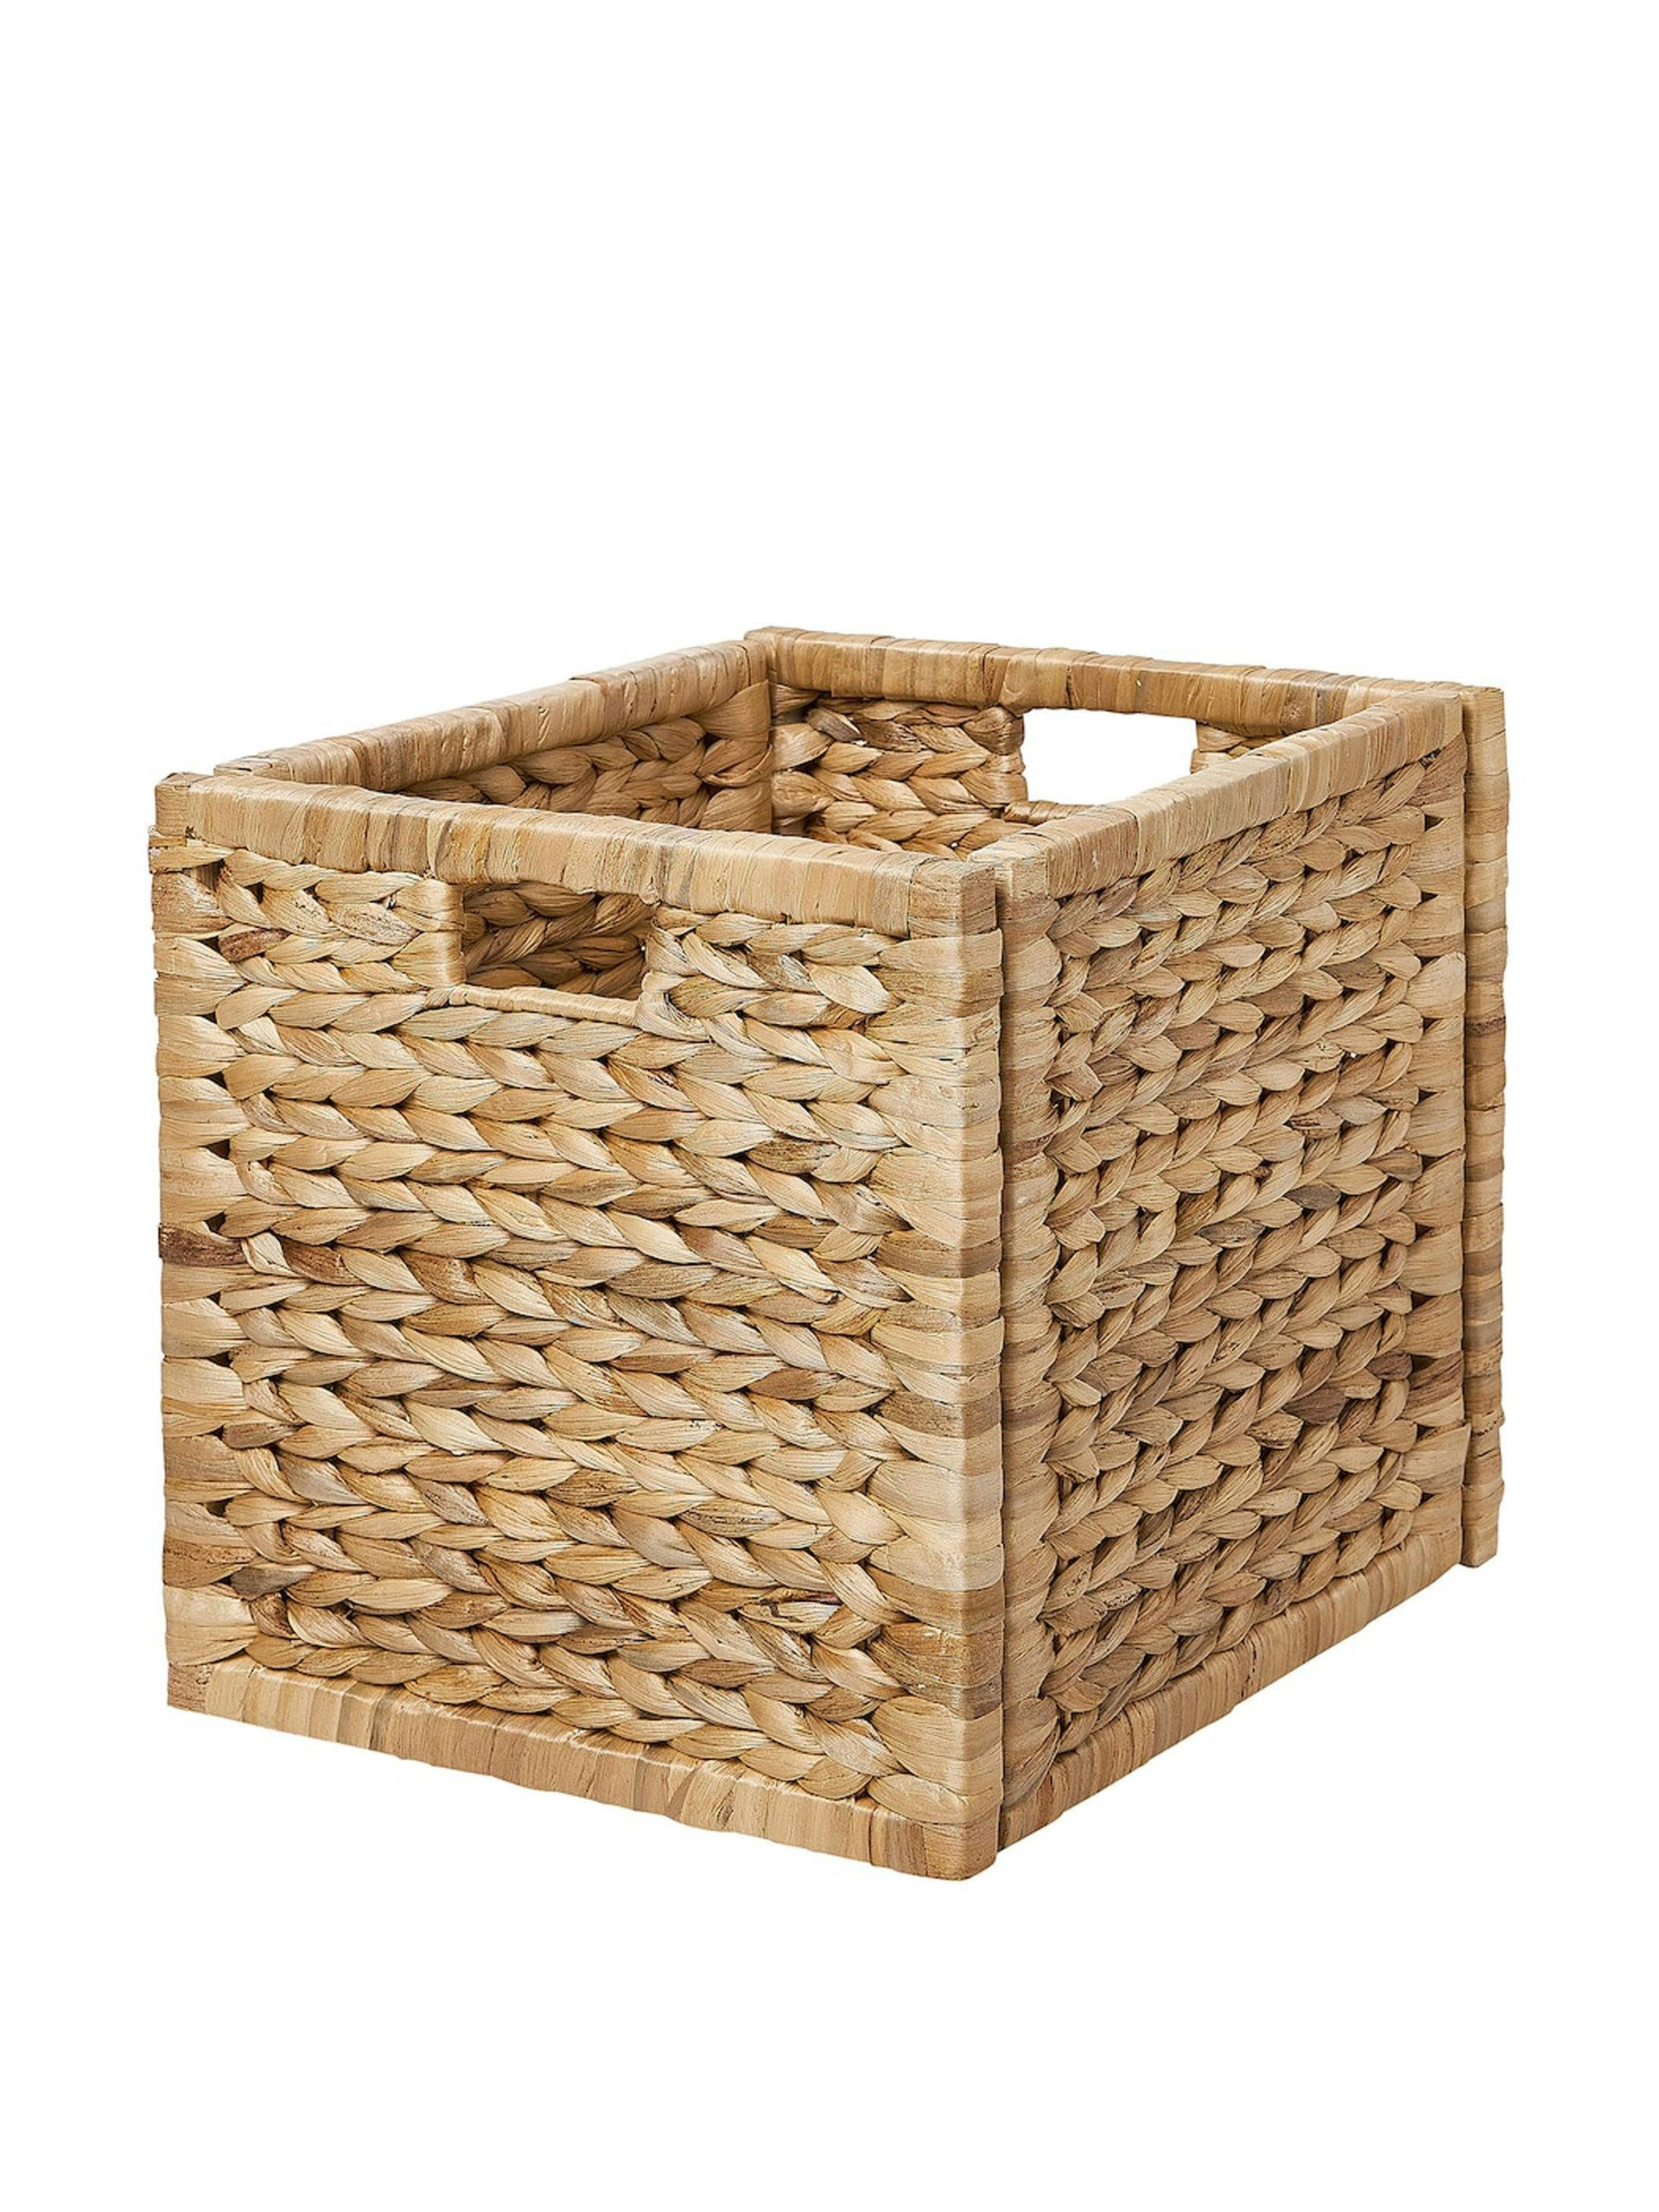 Handmade basket from water hyacinth